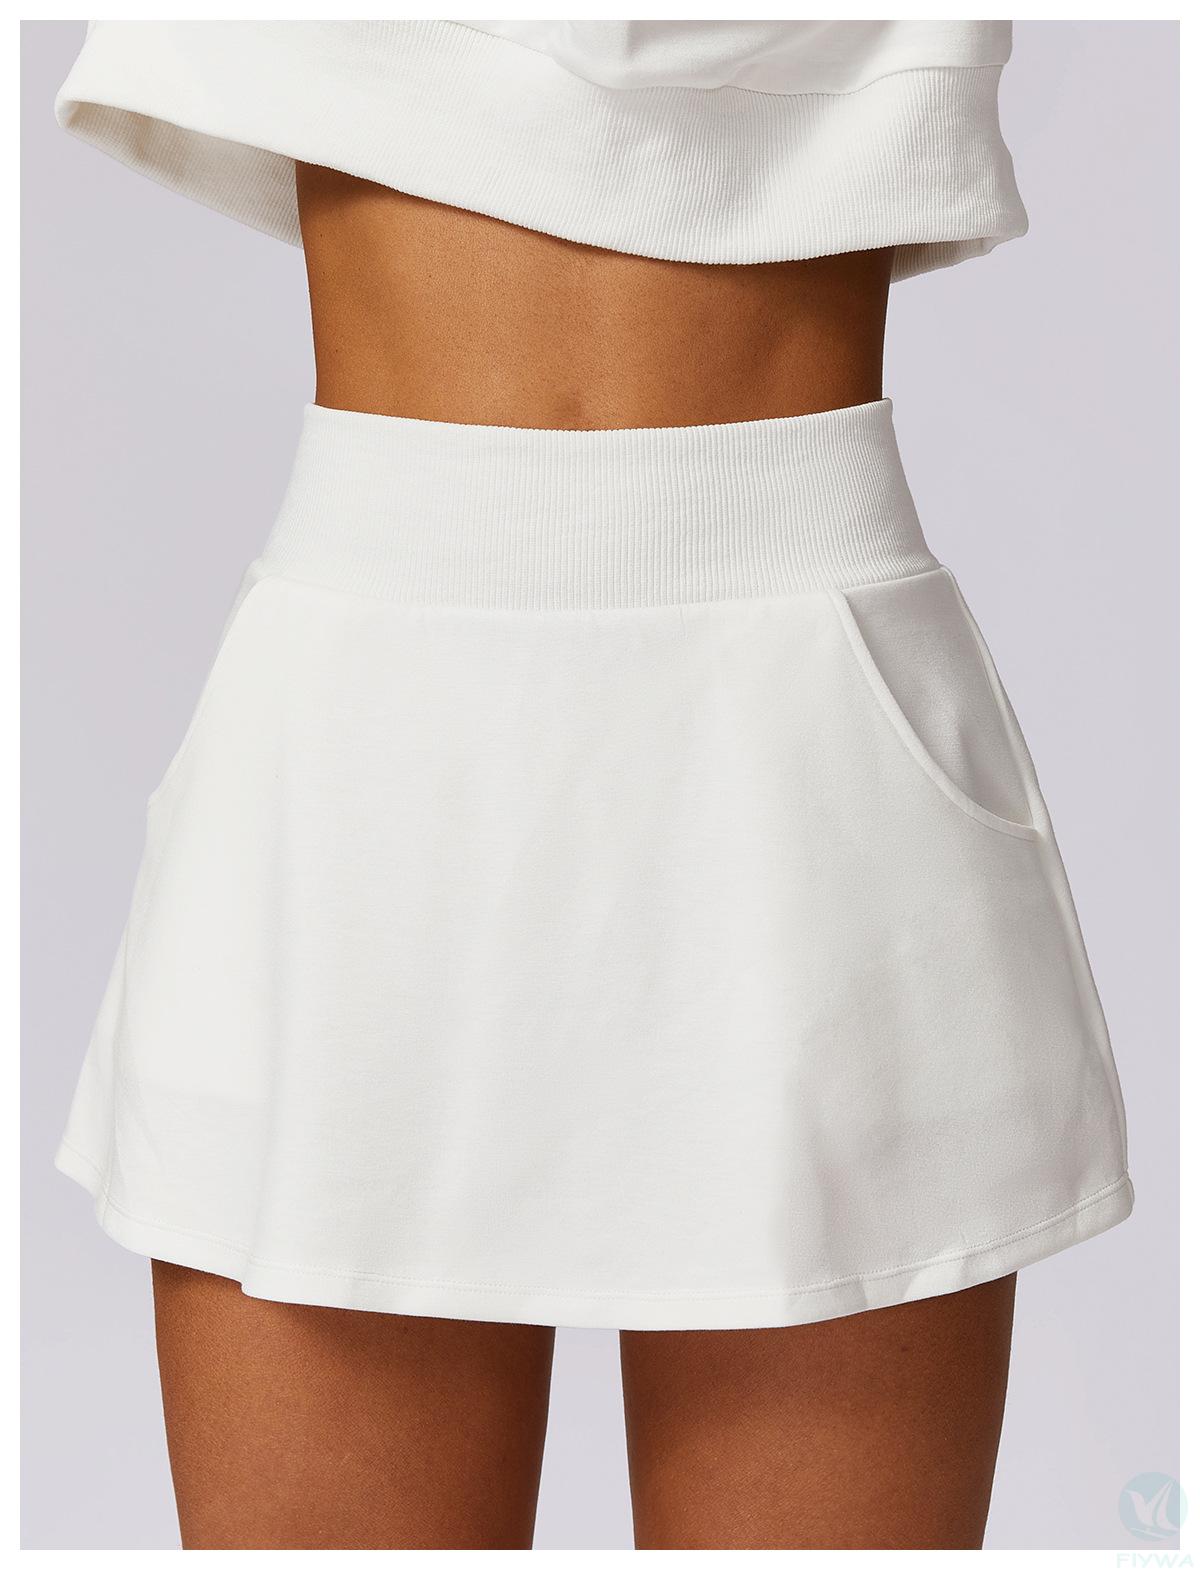 Anti-exposure fake two-piece high-waist sports short skirt half-length tennis badminton breathable fitness A-line skirt FLY-Q-008 - copy - copy